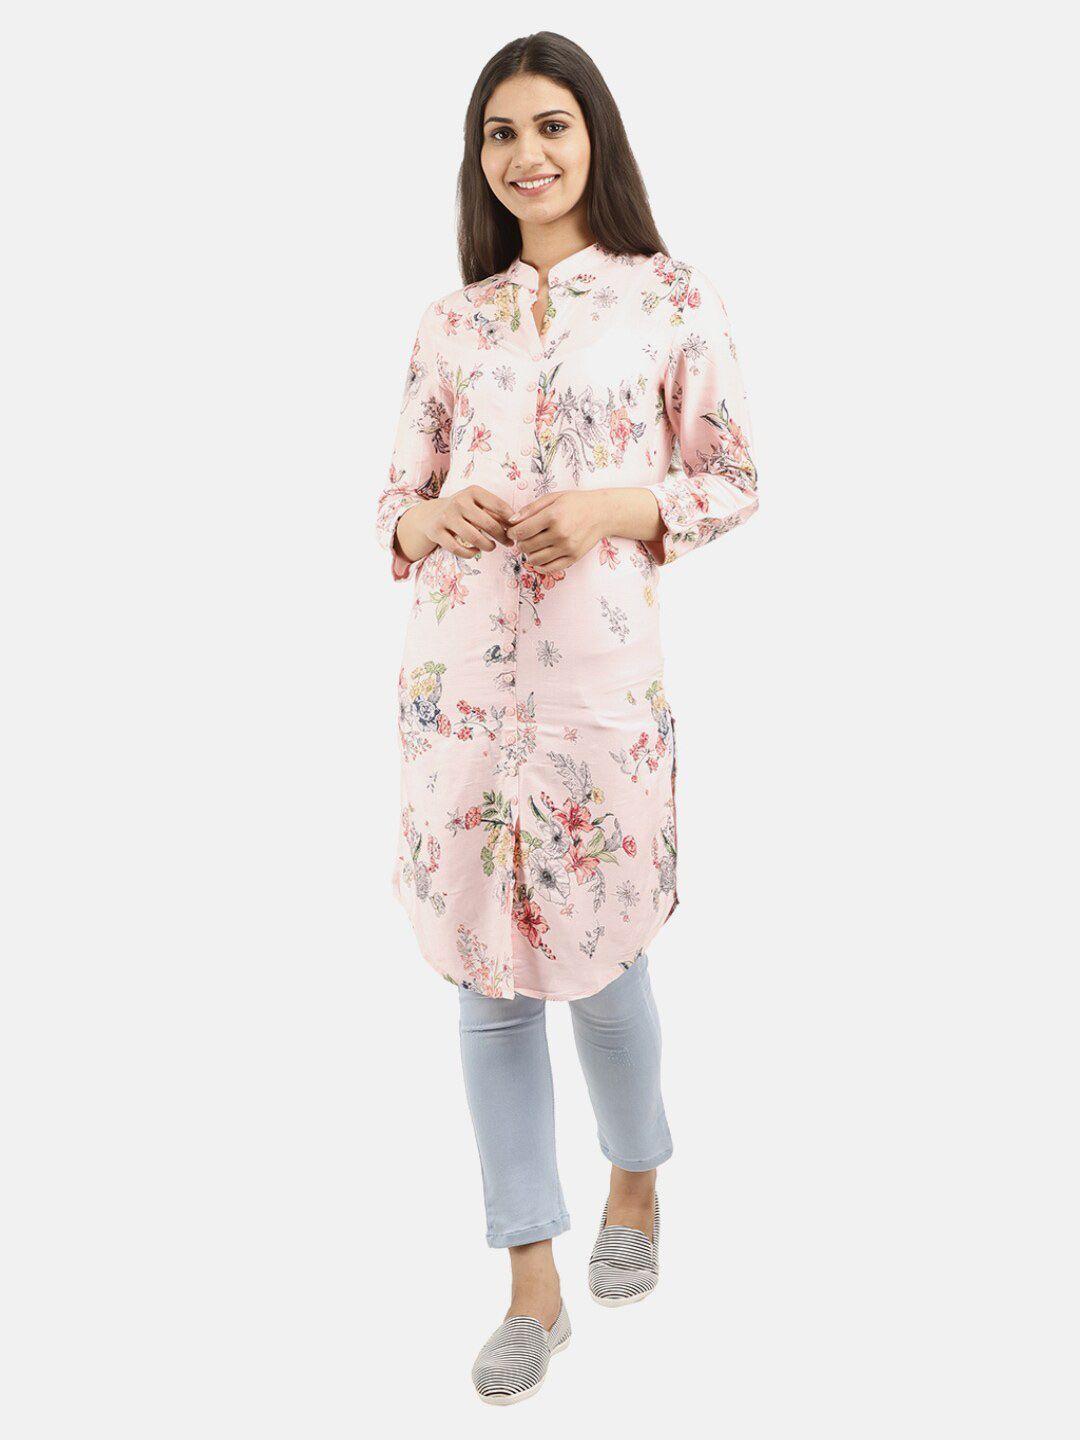 v-mart-women-western-peach-coloured-floral-print-shirt-style-longline-top